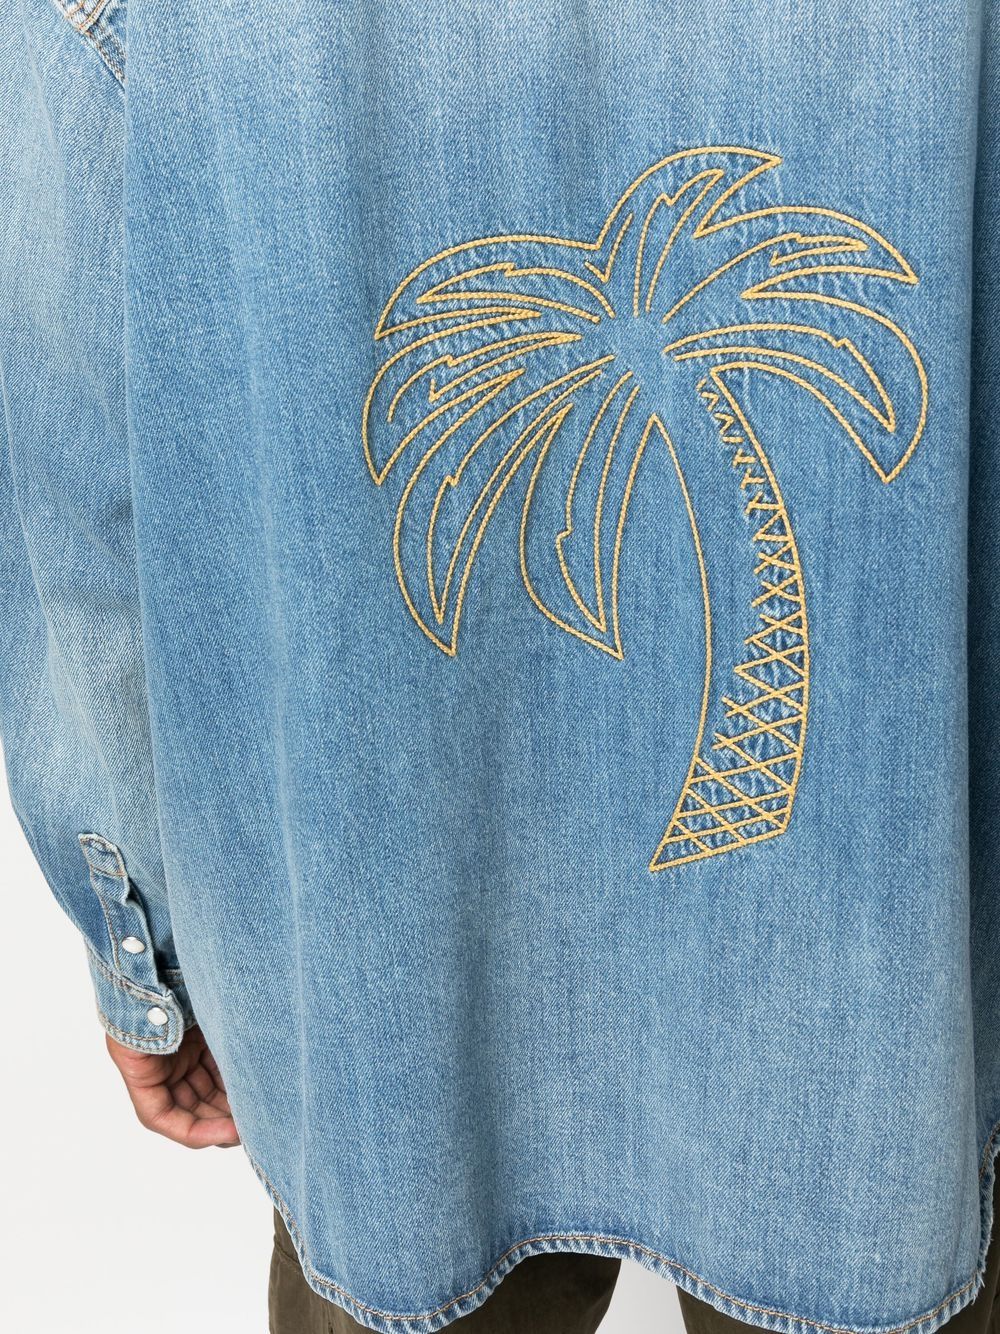 Buy Shirts Palm Angels Palm Tree-embroidery denim shirt